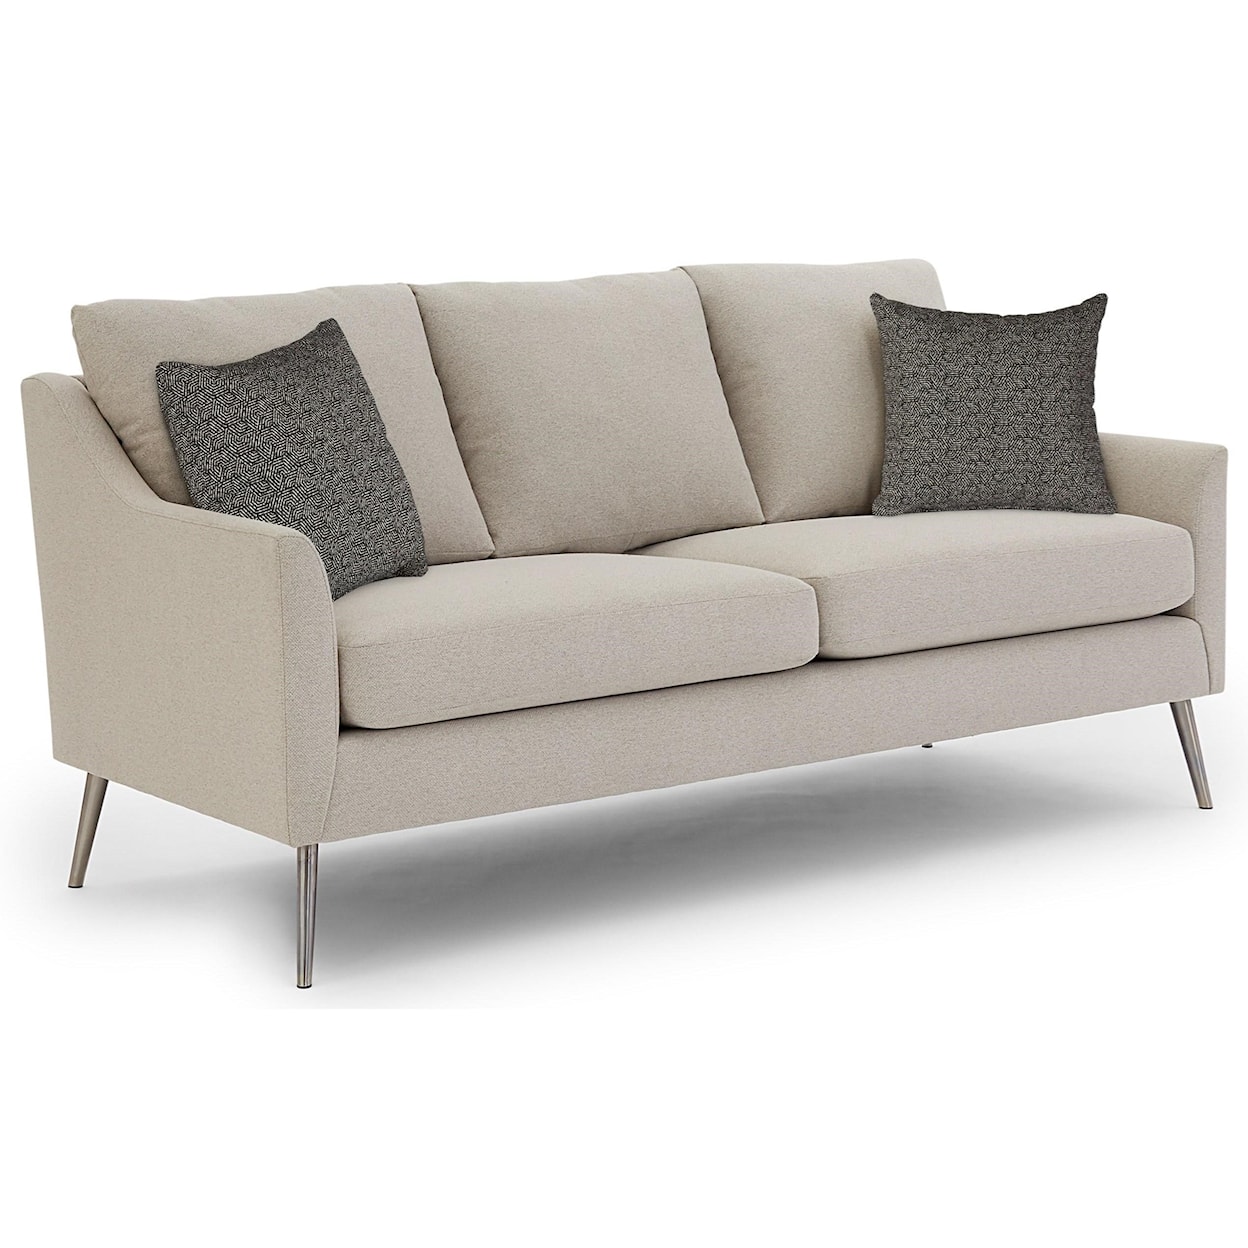 Best Home Furnishings Smitten Stationary Sofa